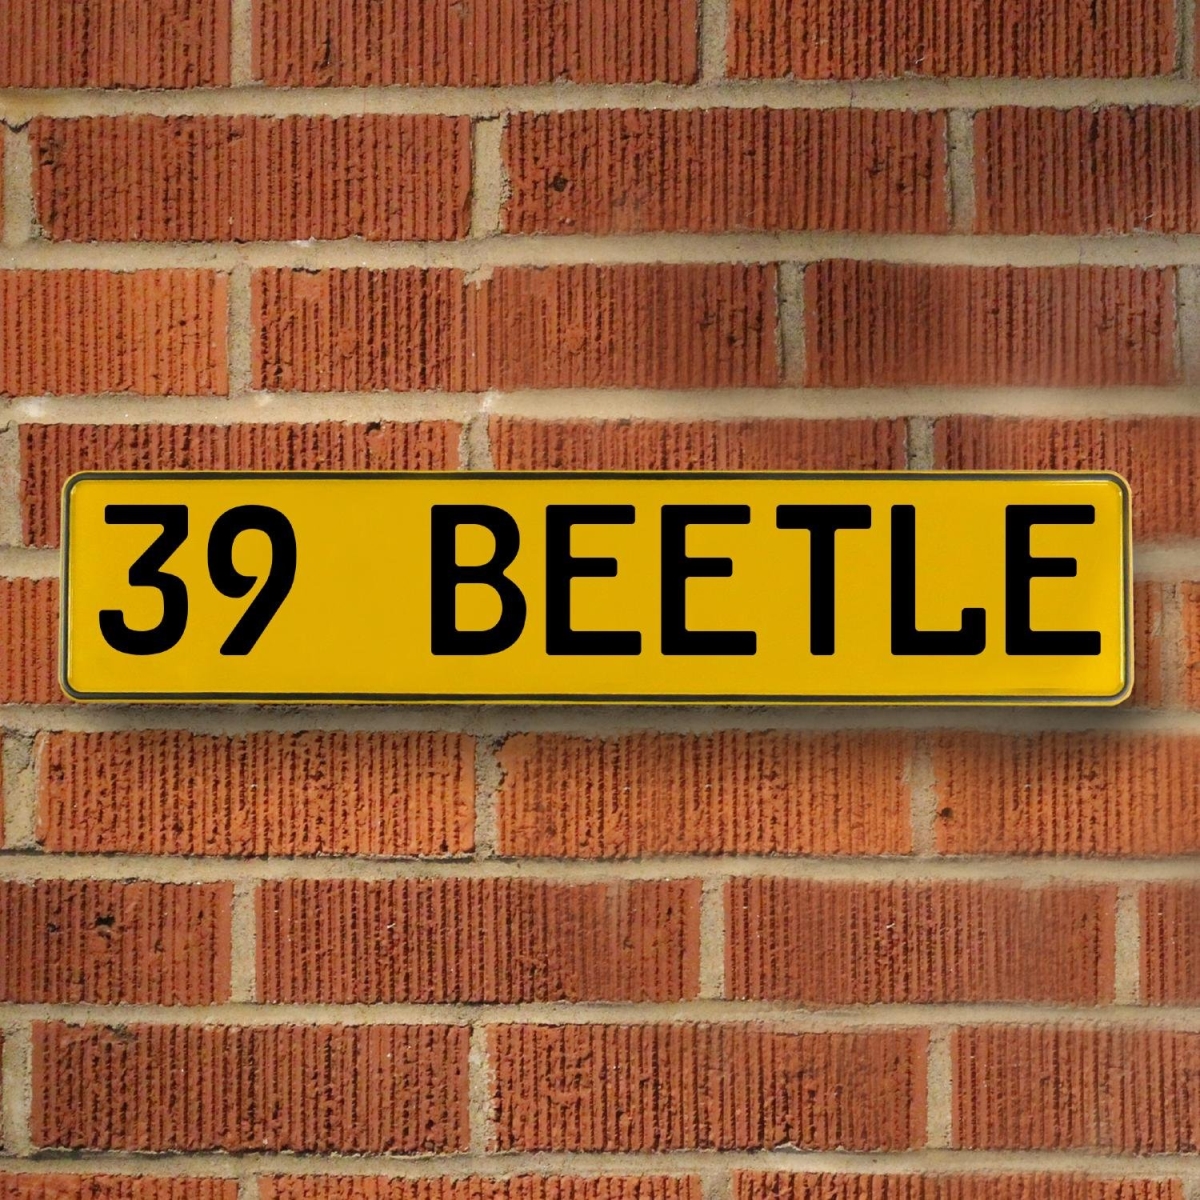 39 Beetle - Yellow Aluminum Street Sign Mancave Euro Plate Name Door Sign Wall